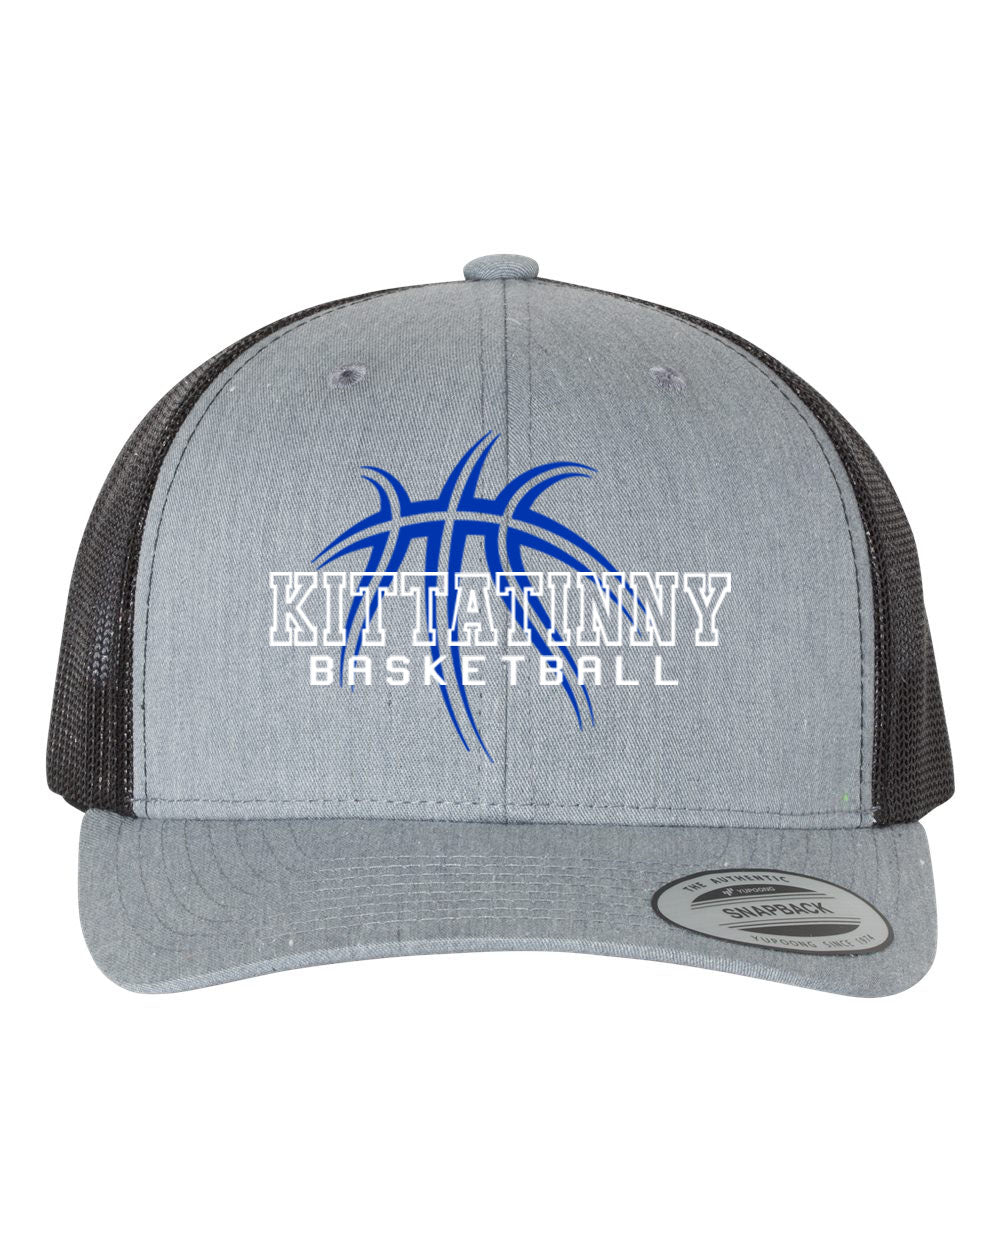 Kittatinny Basketball Design 4 Trucker Hat